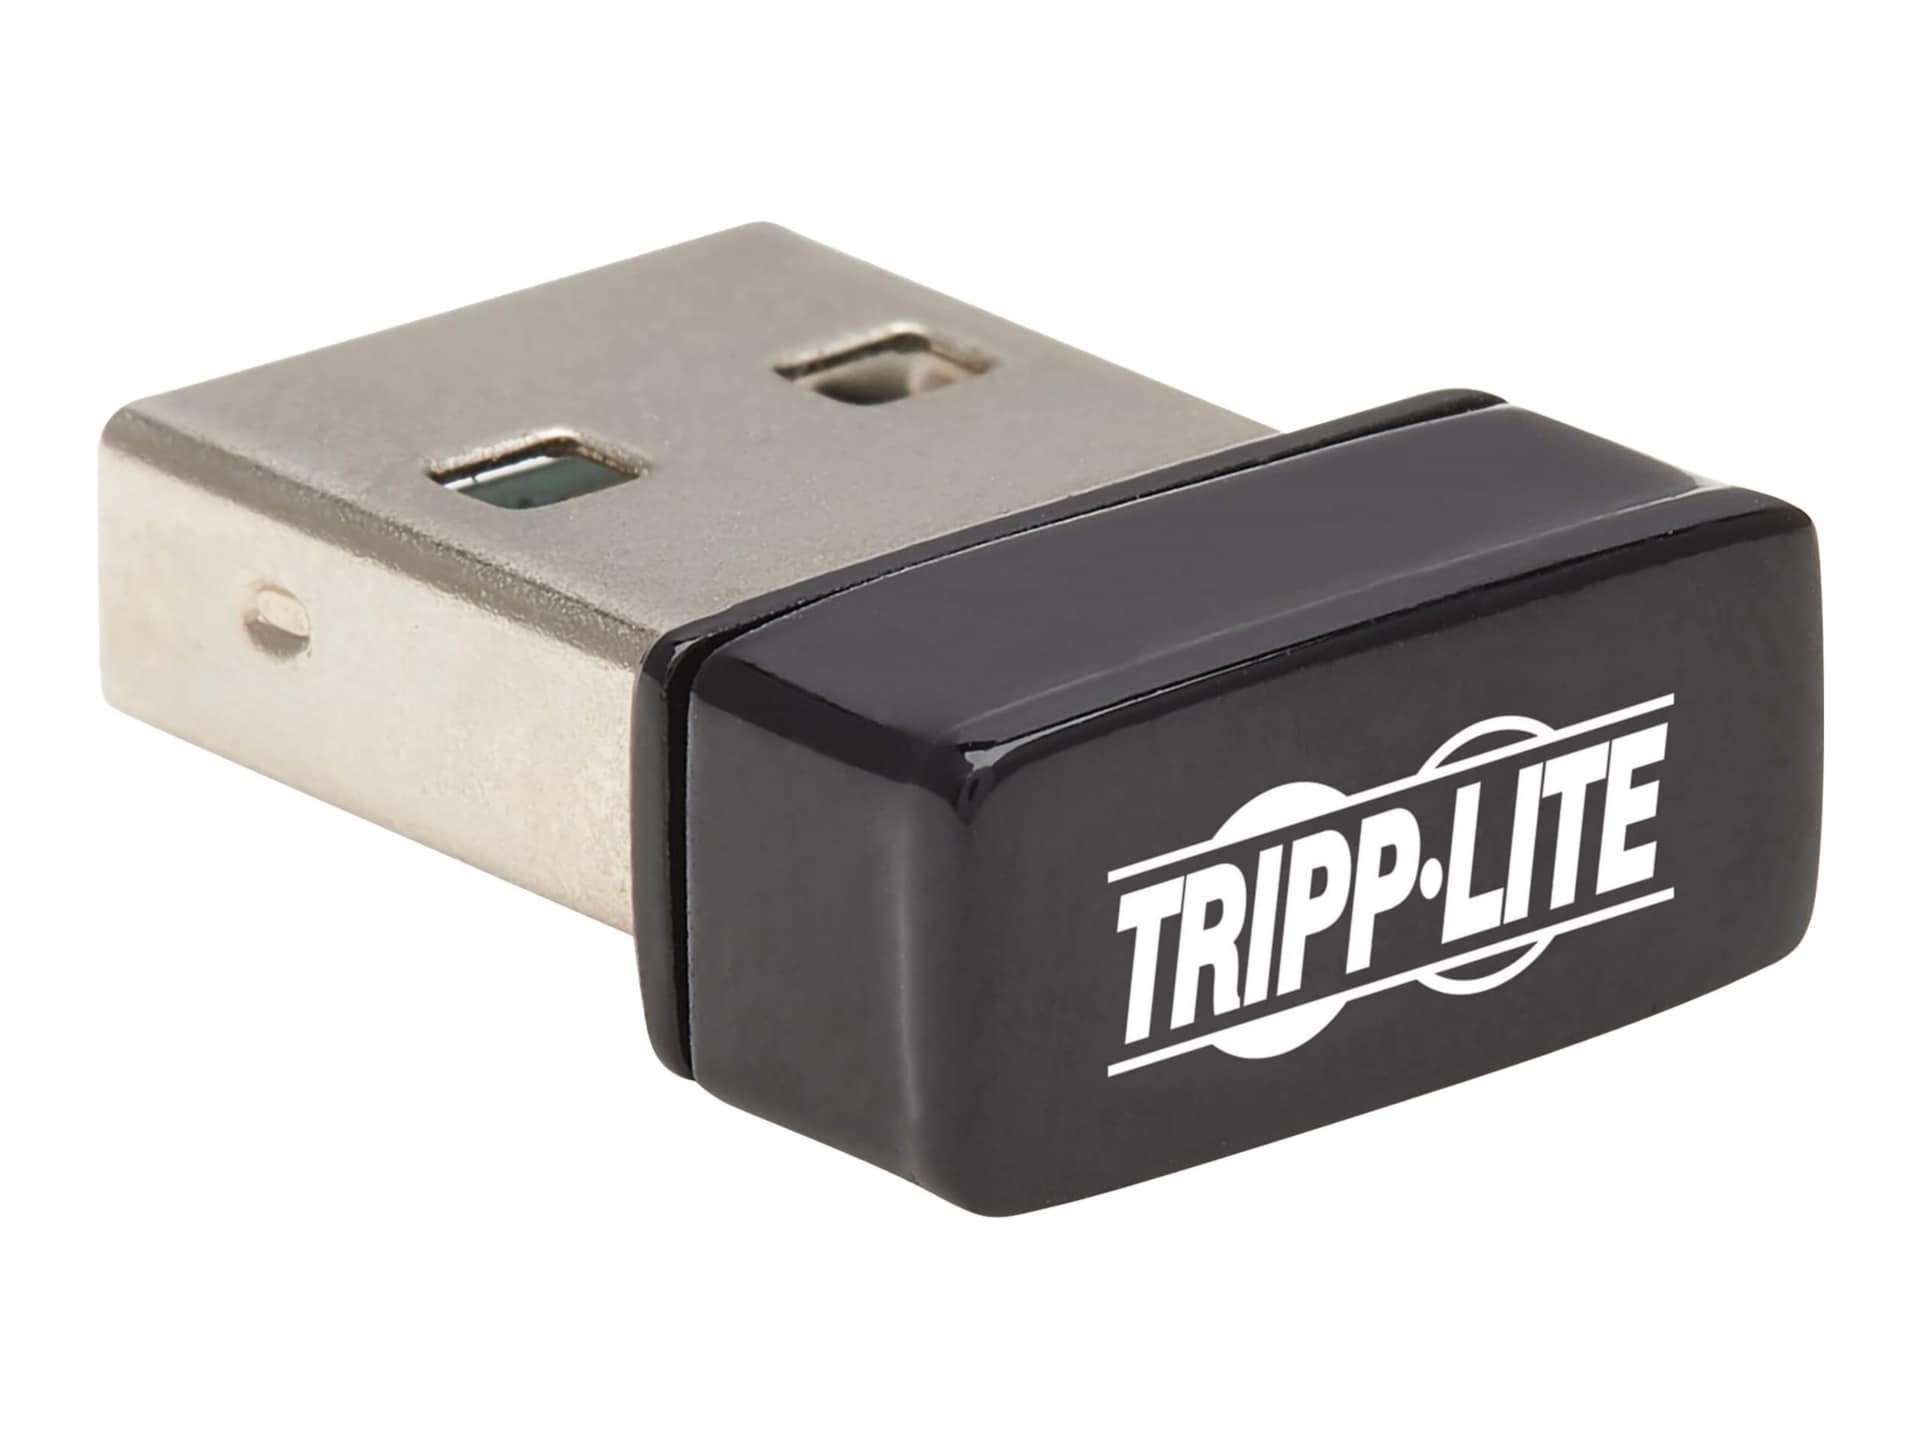 Eaton Tripp Lite Series USB 2.0 Wi-Fi Adapter, AC600 2.4Ghz/5Ghz Dual Band, 1T1R, 802.11ac - network adapter - USB 2.0